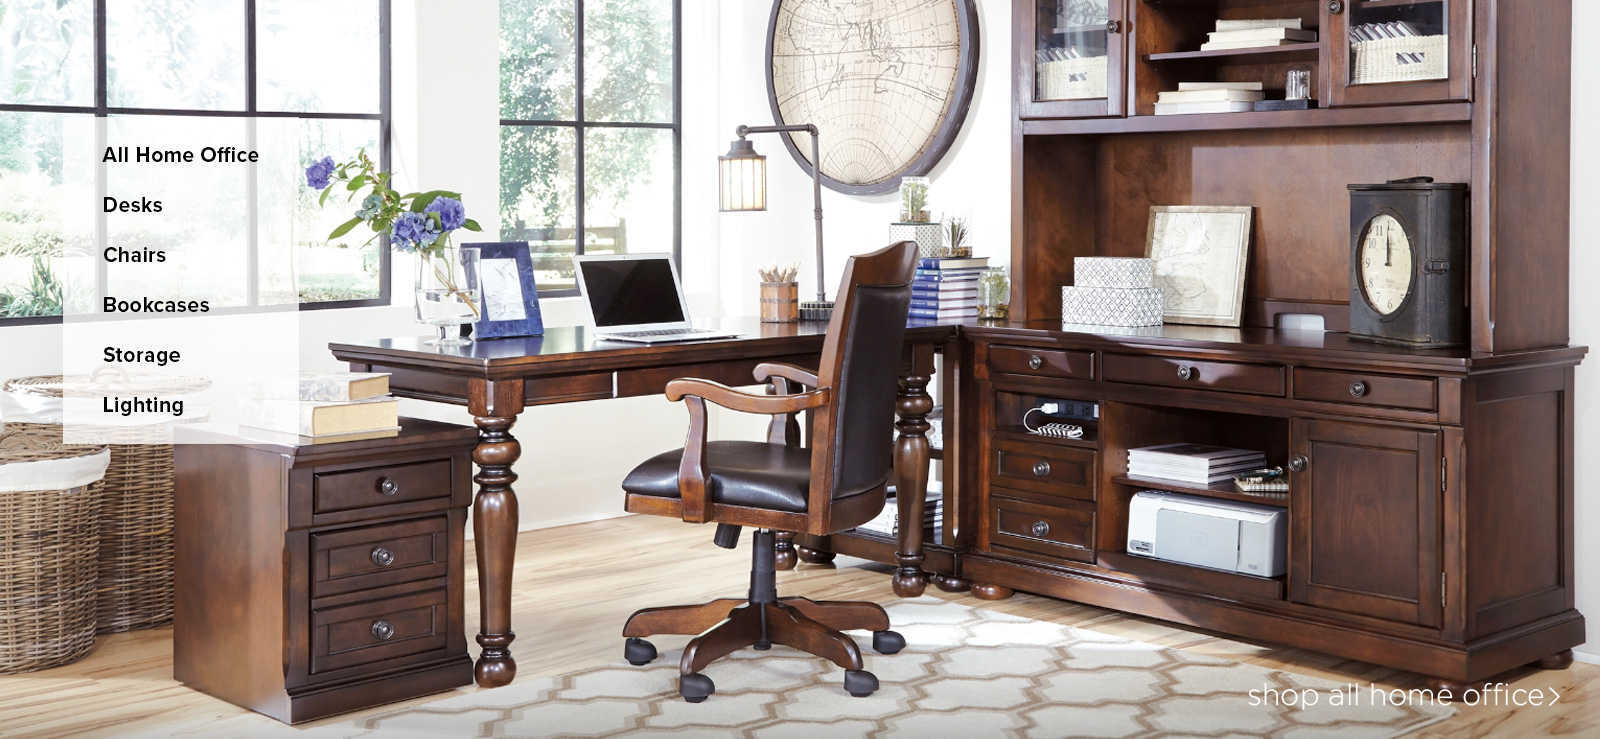 Amazing Home Office. Shop Desks desk tables home office